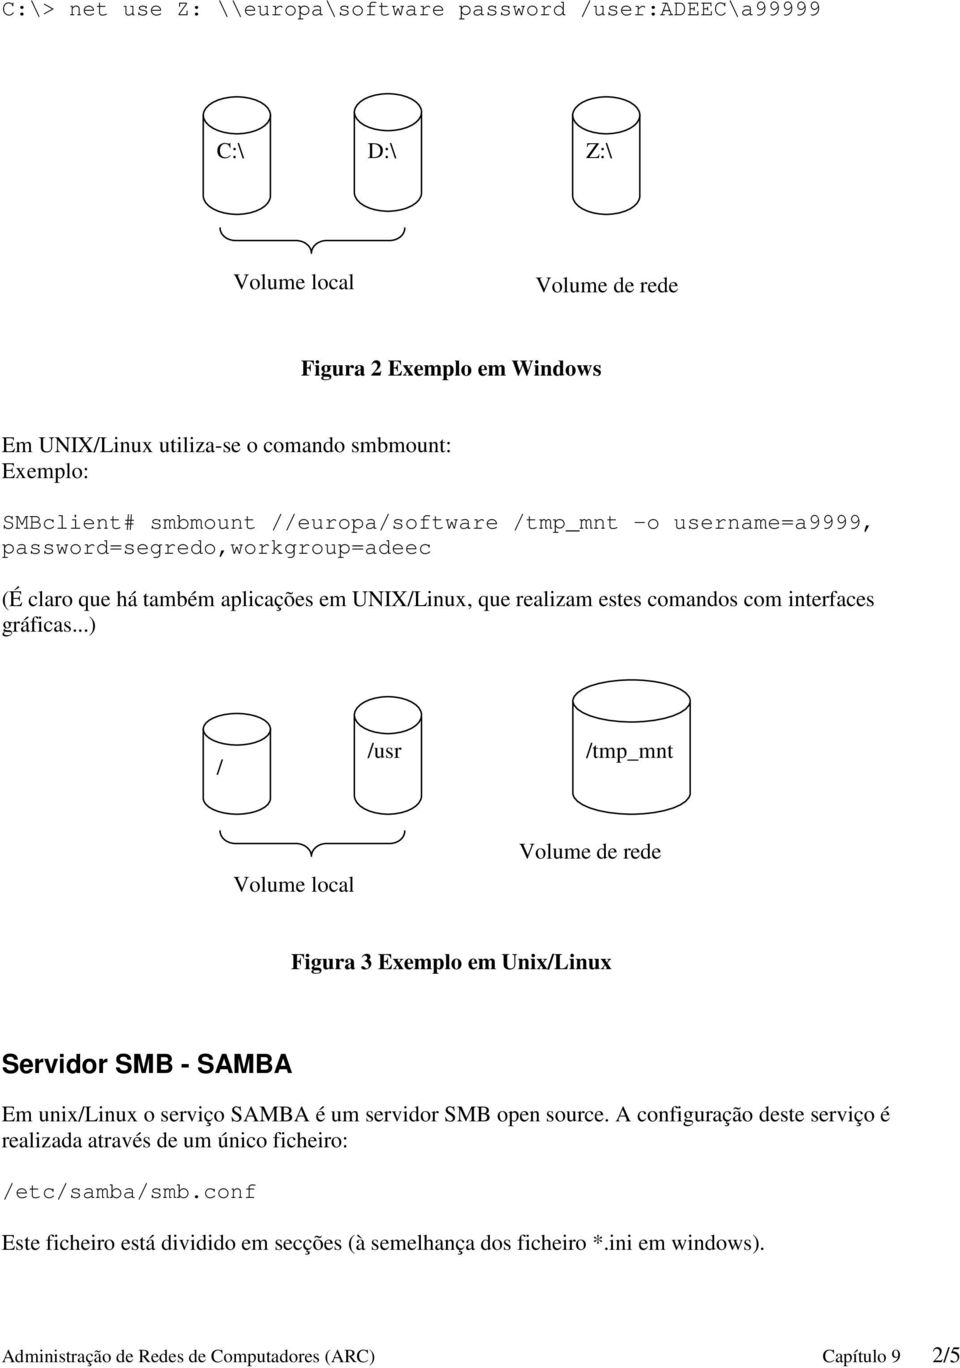 ..) / /usr /tmp_mnt Volume local Volume de rede Figura 3 Exemplo em Unix/Linux Servidor SMB - SAMBA Em unix/linux o serviço SAMBA é um servidor SMB open source.